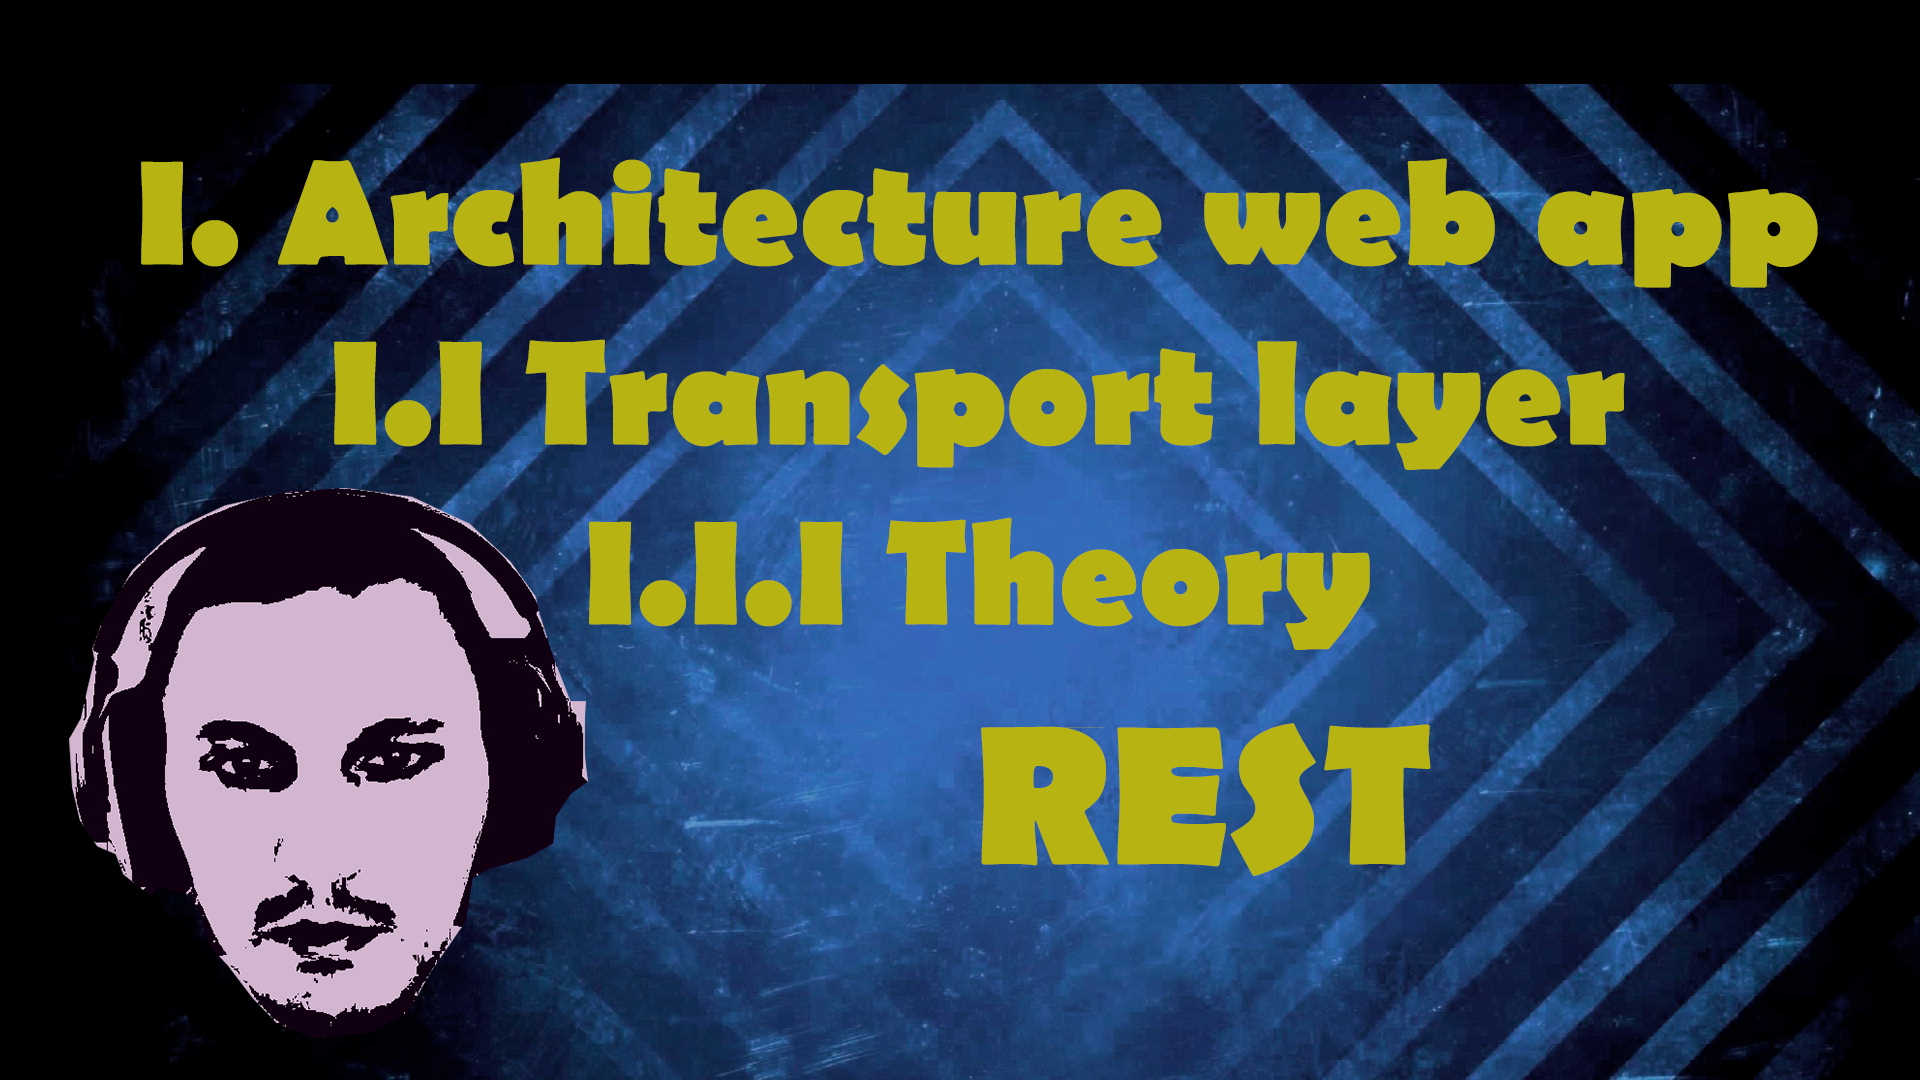 I. Architecture web app I.I Transport layer I.I.I Theory - REST